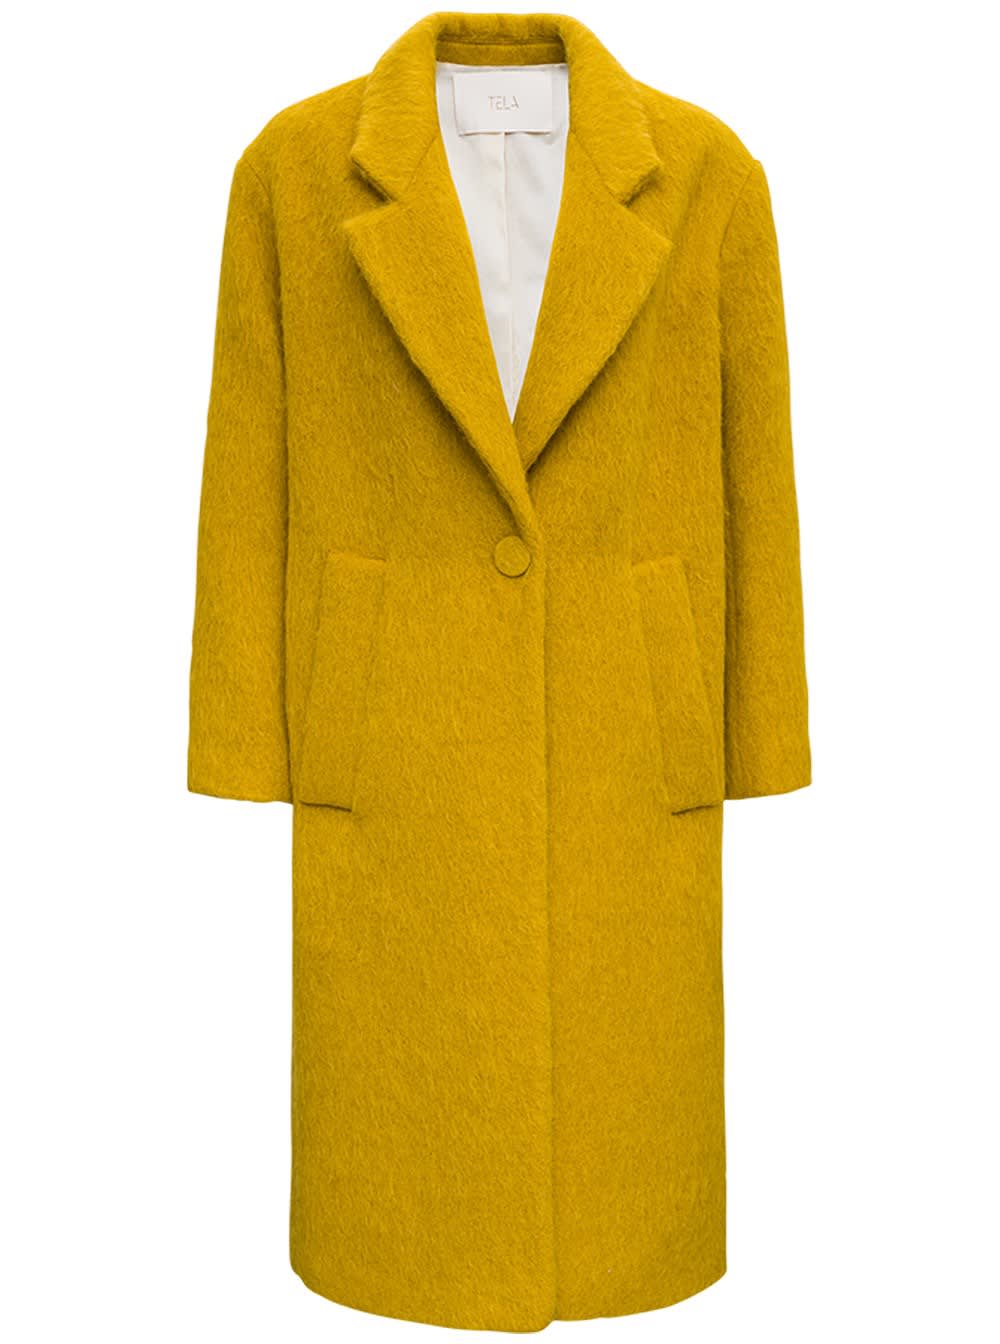 Tela Glam Long Coat In Ocher Colored Wool Blend